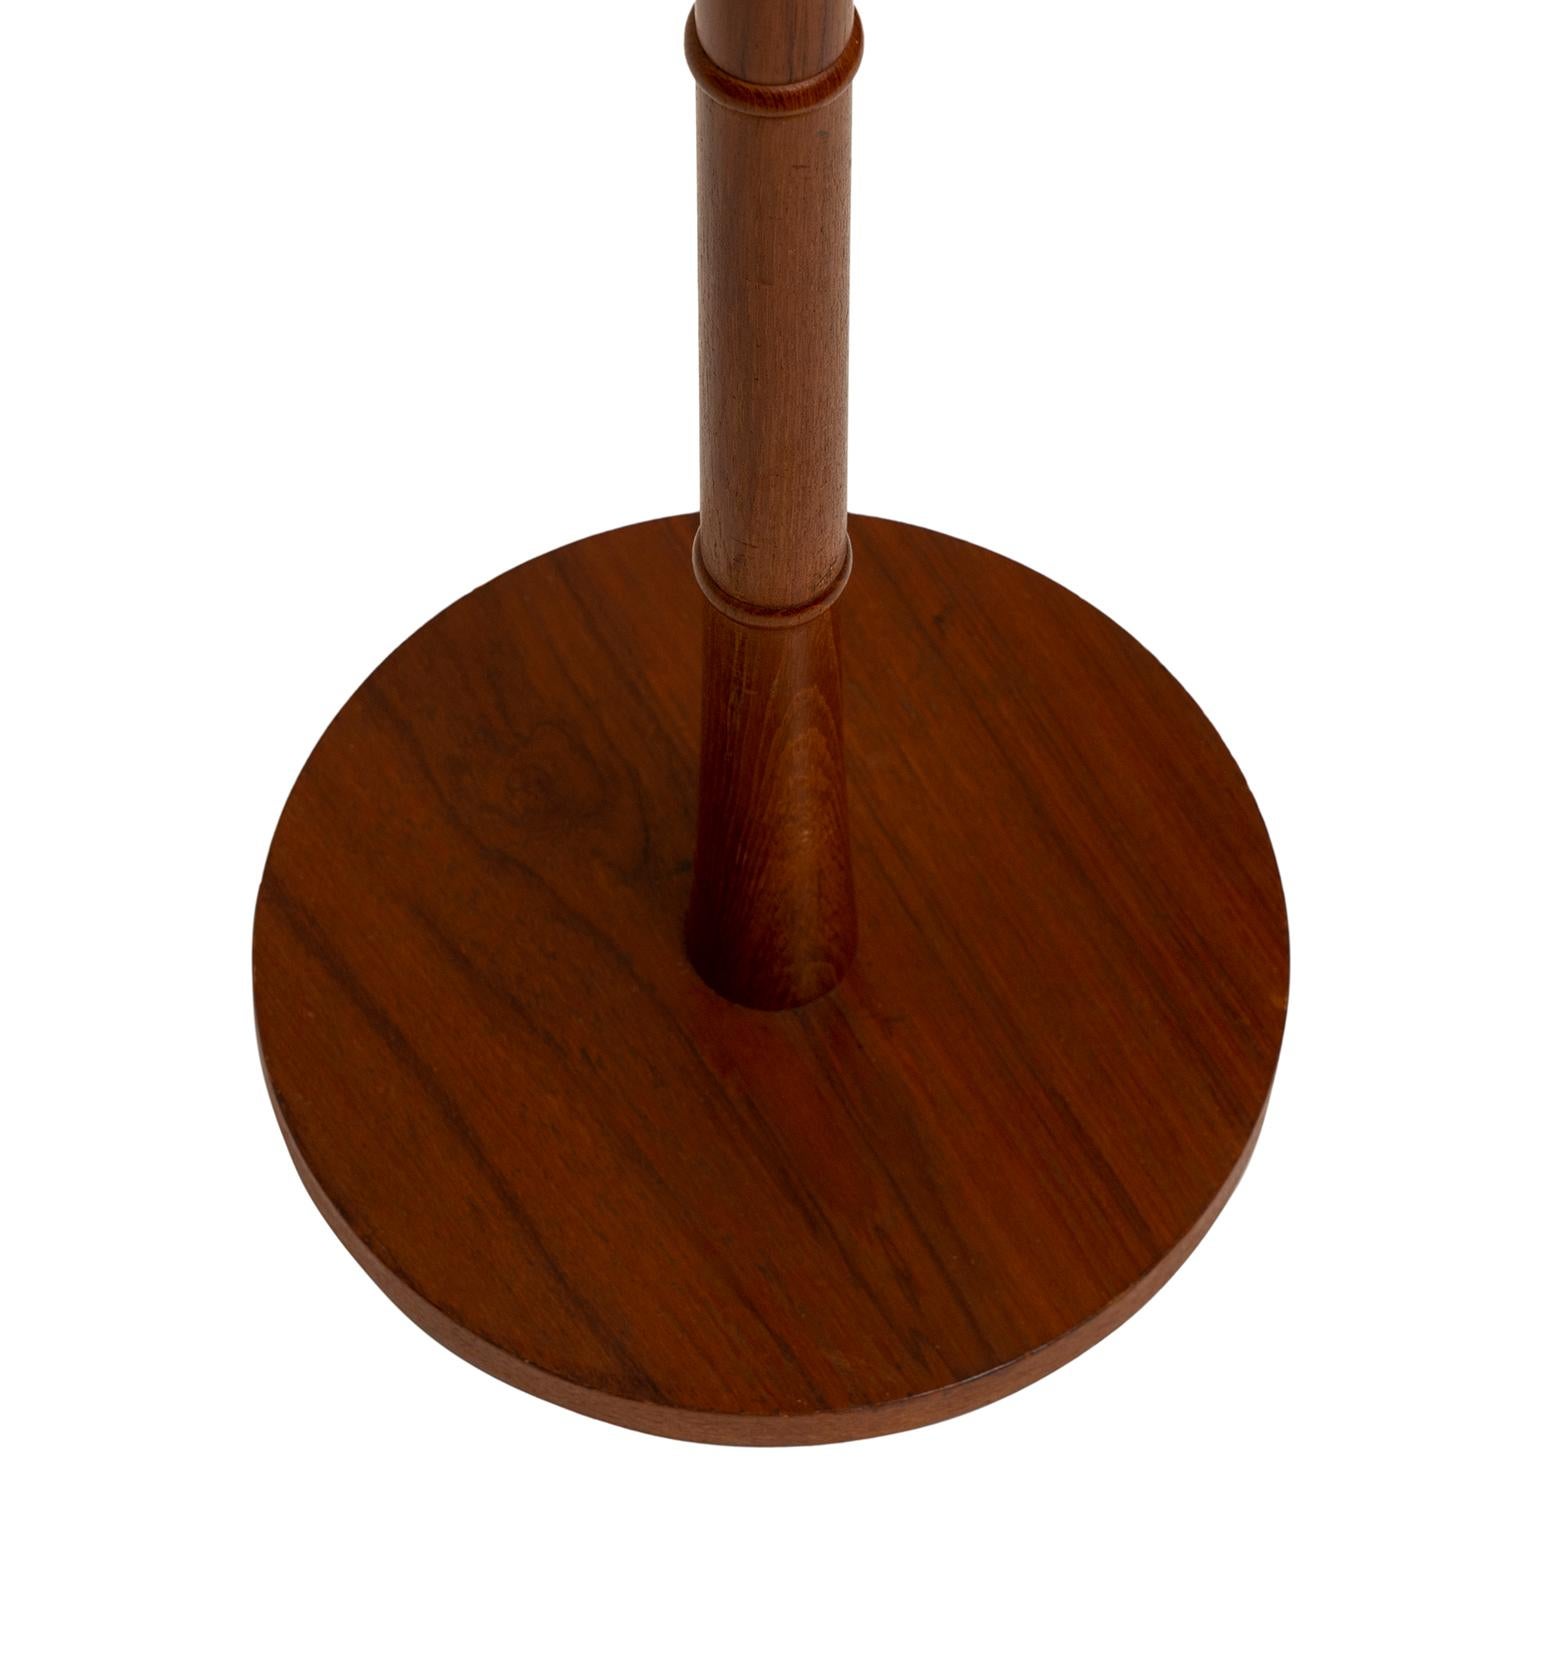 French Lamp Floor Standing Vintage Chestnut Brown Suede Original Vellum Shade 5ft3.5